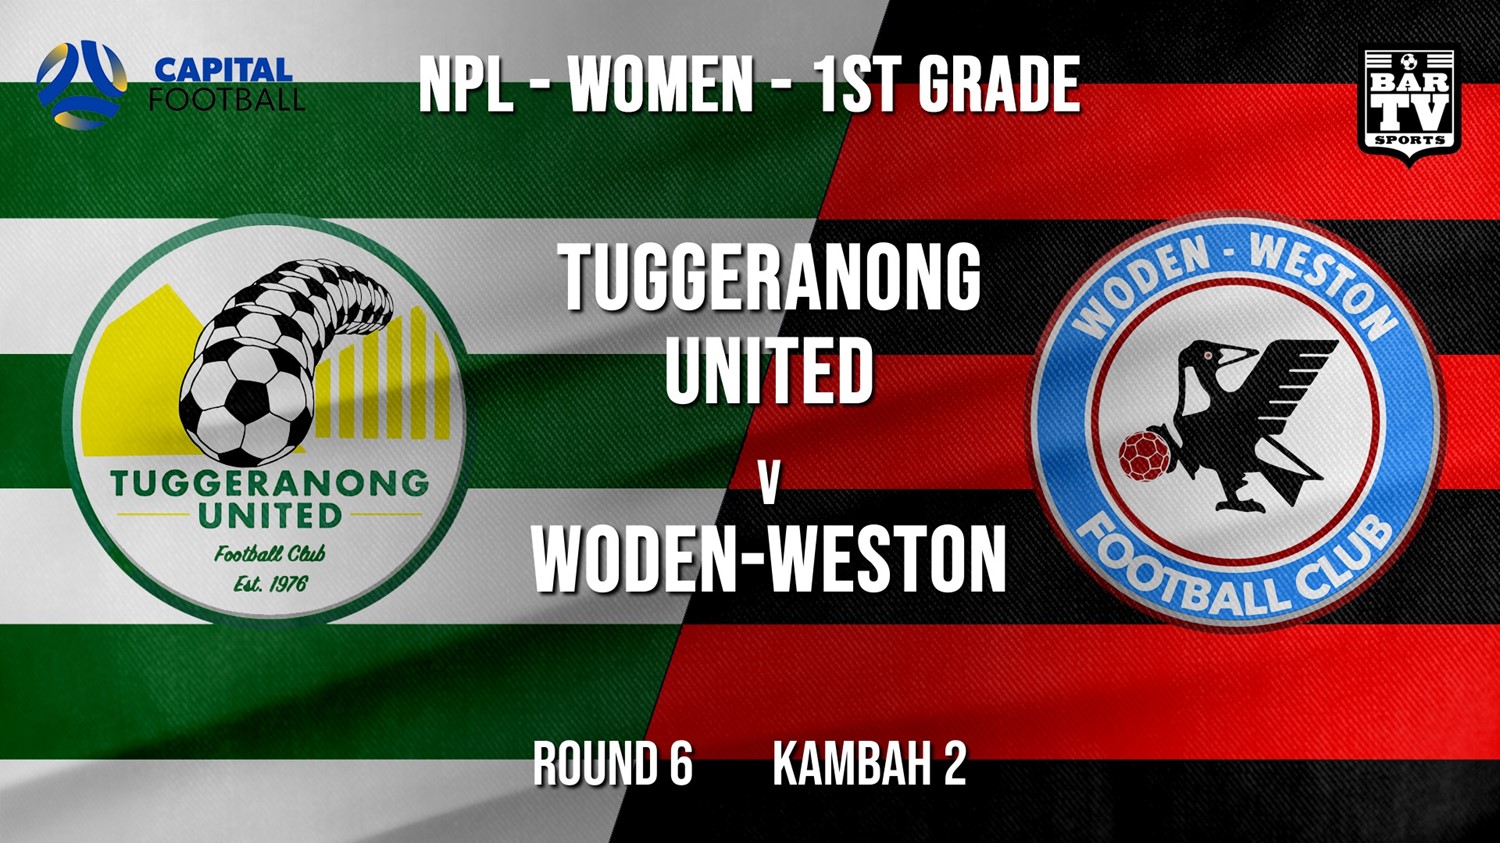 NPLW - Capital Round 6 - Tuggeranong United FC (women) v Woden-Weston FC (women) Minigame Slate Image